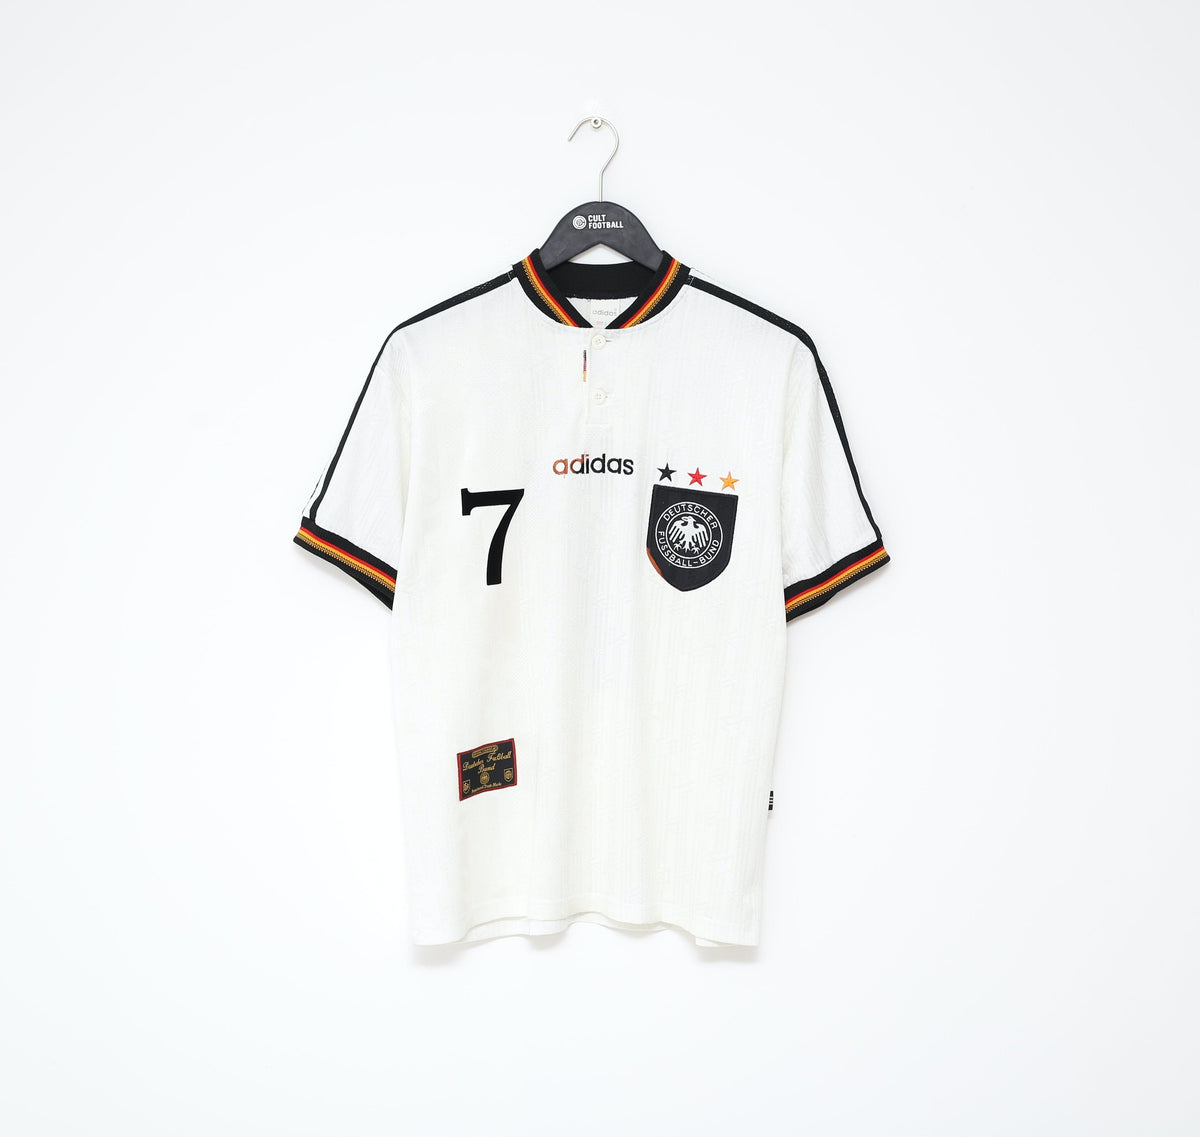 1998/00 RAUL #10 Spain Vintage adidas Home Football Shirt (S